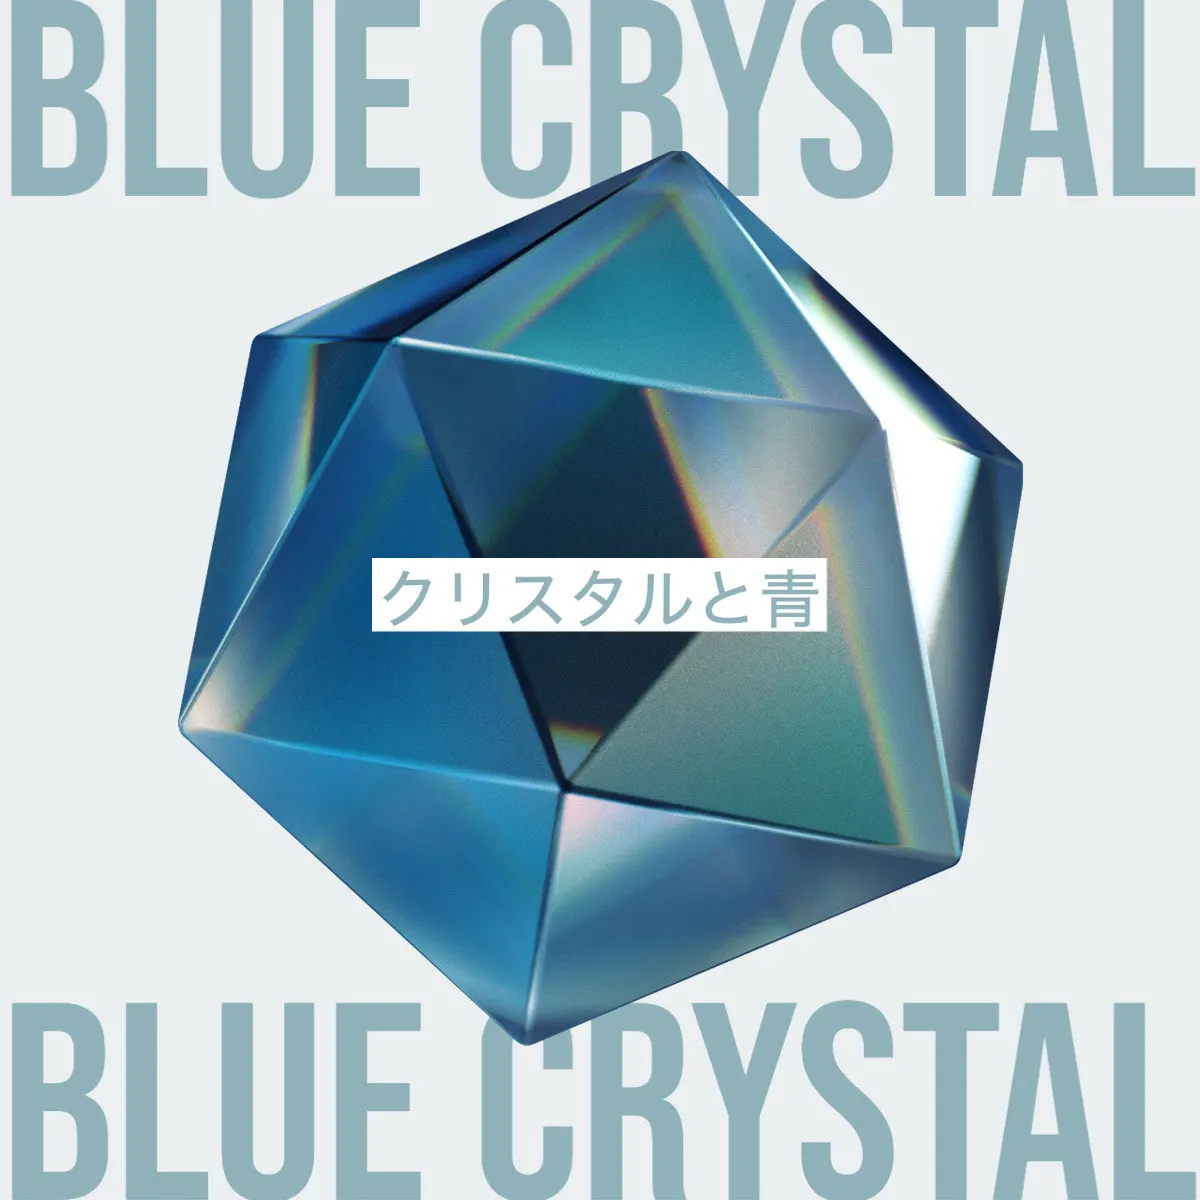 Blue crystal album cover